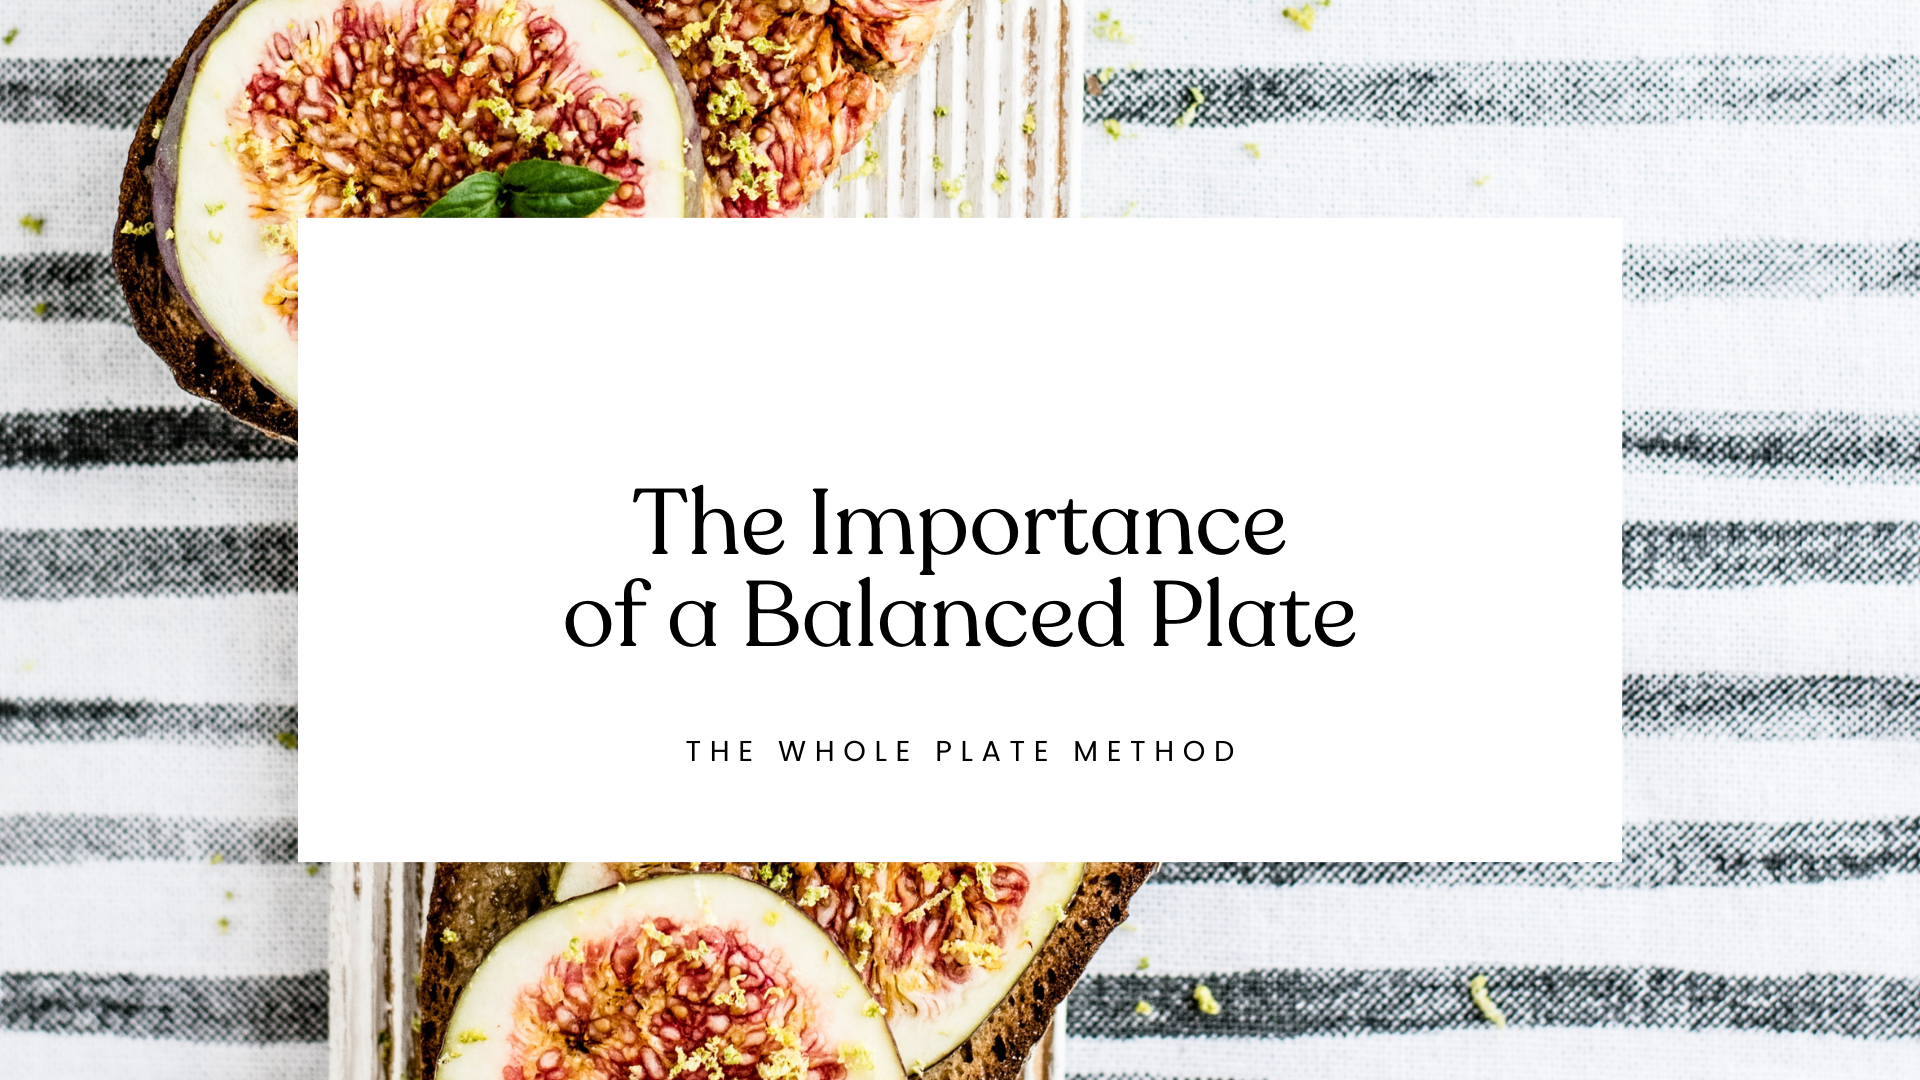 mindful eating balanced meals. https://www.info-on-high-blood-pressure.com/mindful-eating.html